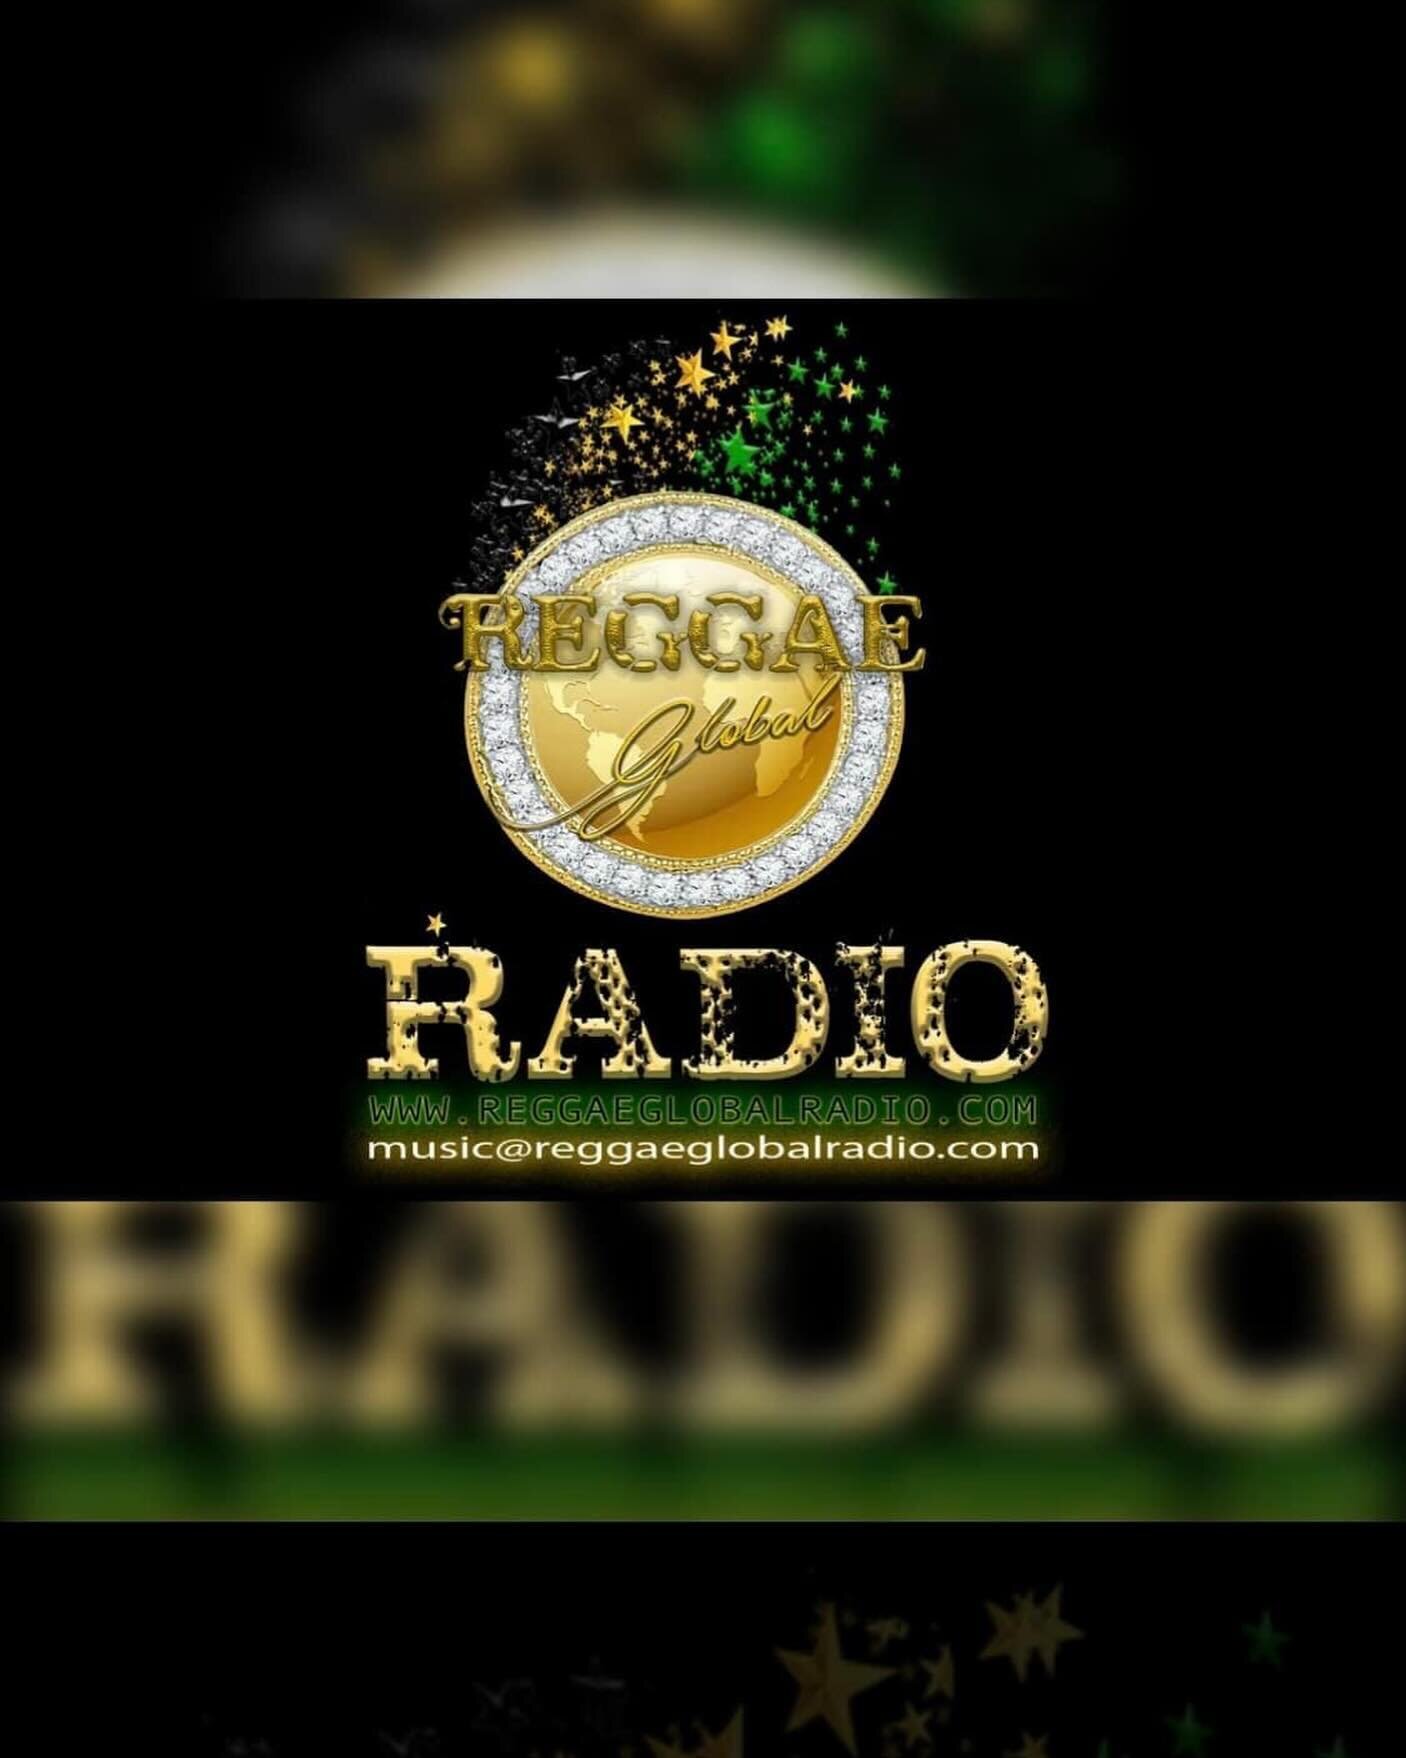 Join Sista Irie&rsquo;s Conscious Party tonight 8-10 pm Reggae Global Radio www.reggae global radio.com ❤️💛💚 @marlonburrell  @majestymediaglobal @reggaeglobalradio1 @sista_irie